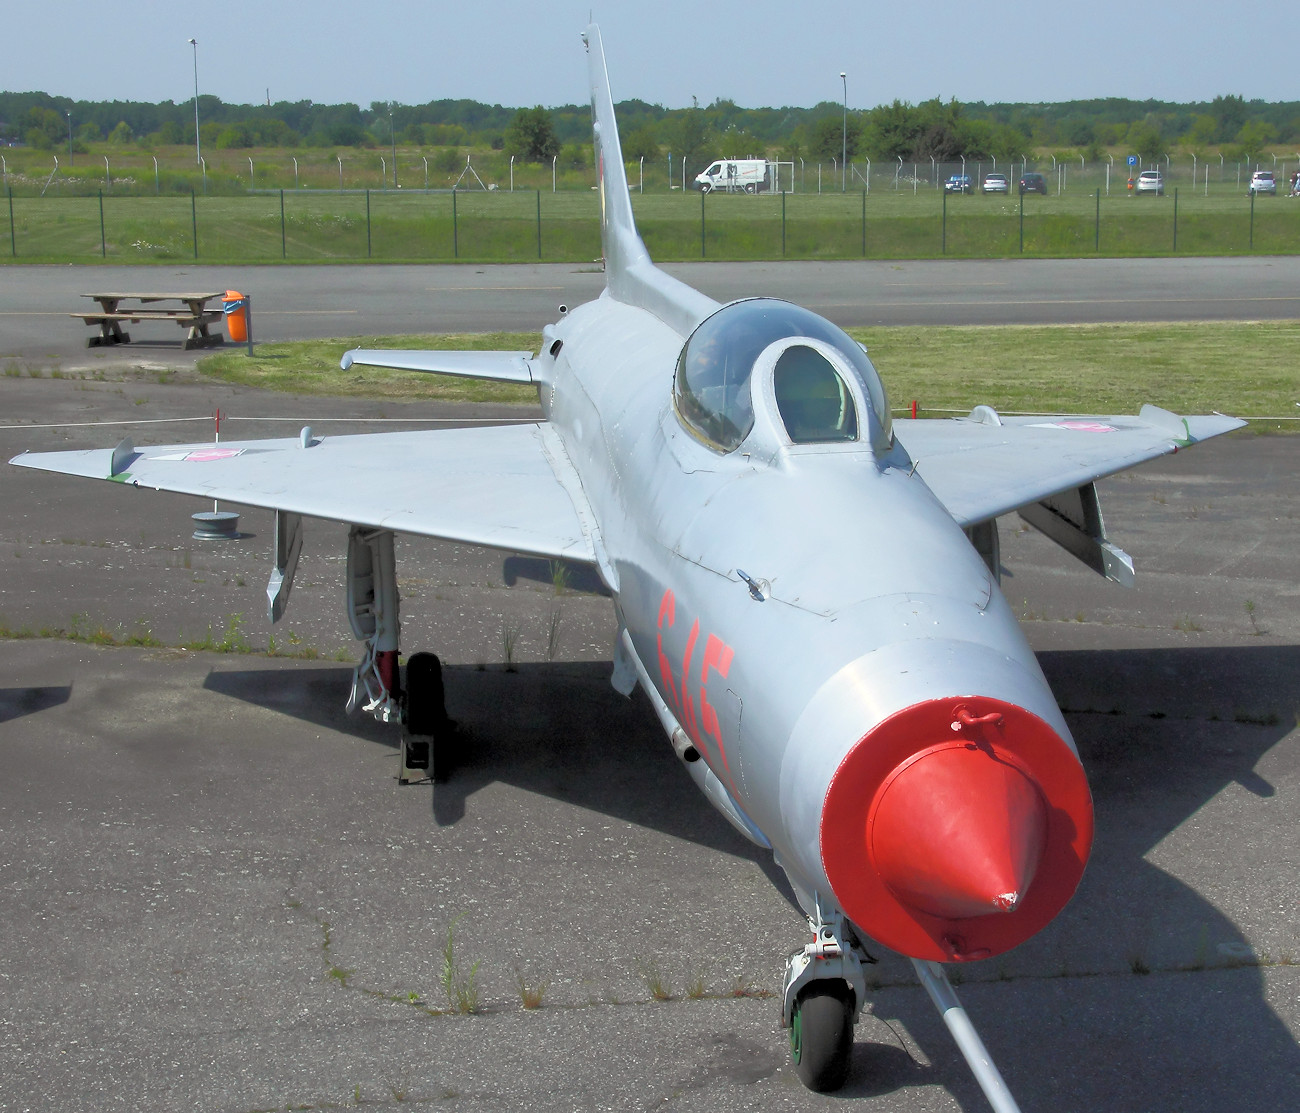 MiG-21 F-13 - Bugansicht des Kampfflugzeugs